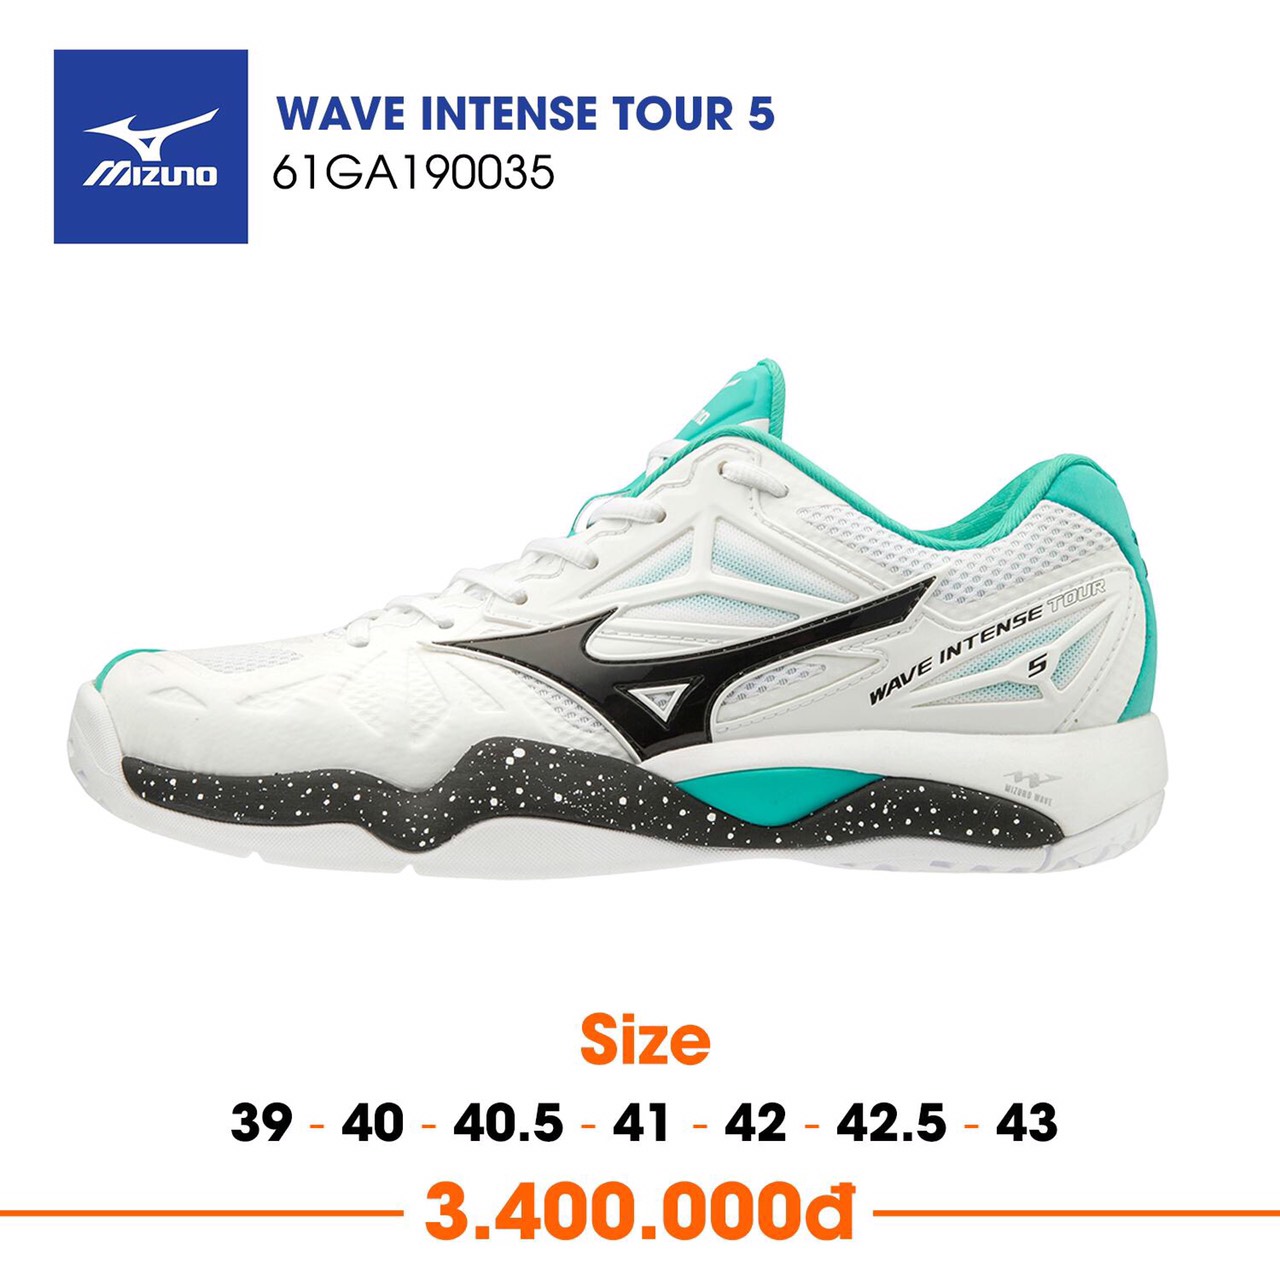 Giày Thể Thao Mizuno Wave Intense Tour 5 61GA190035